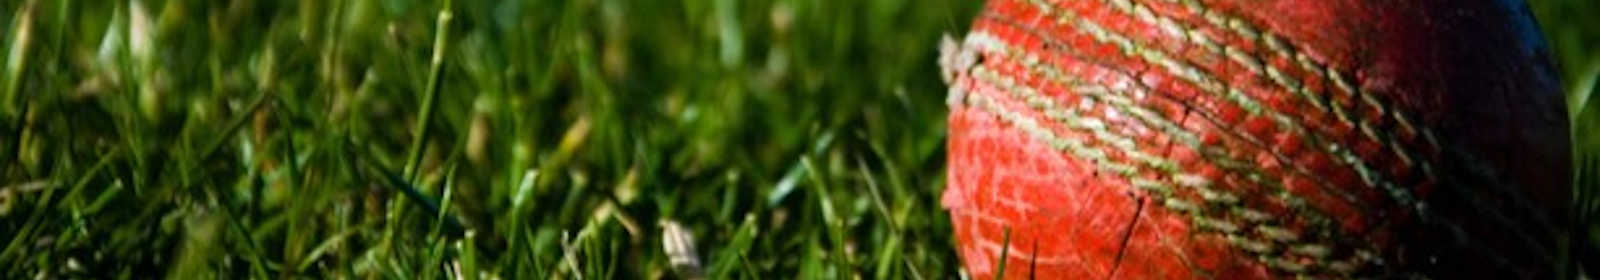 Cricket ball lying in grass